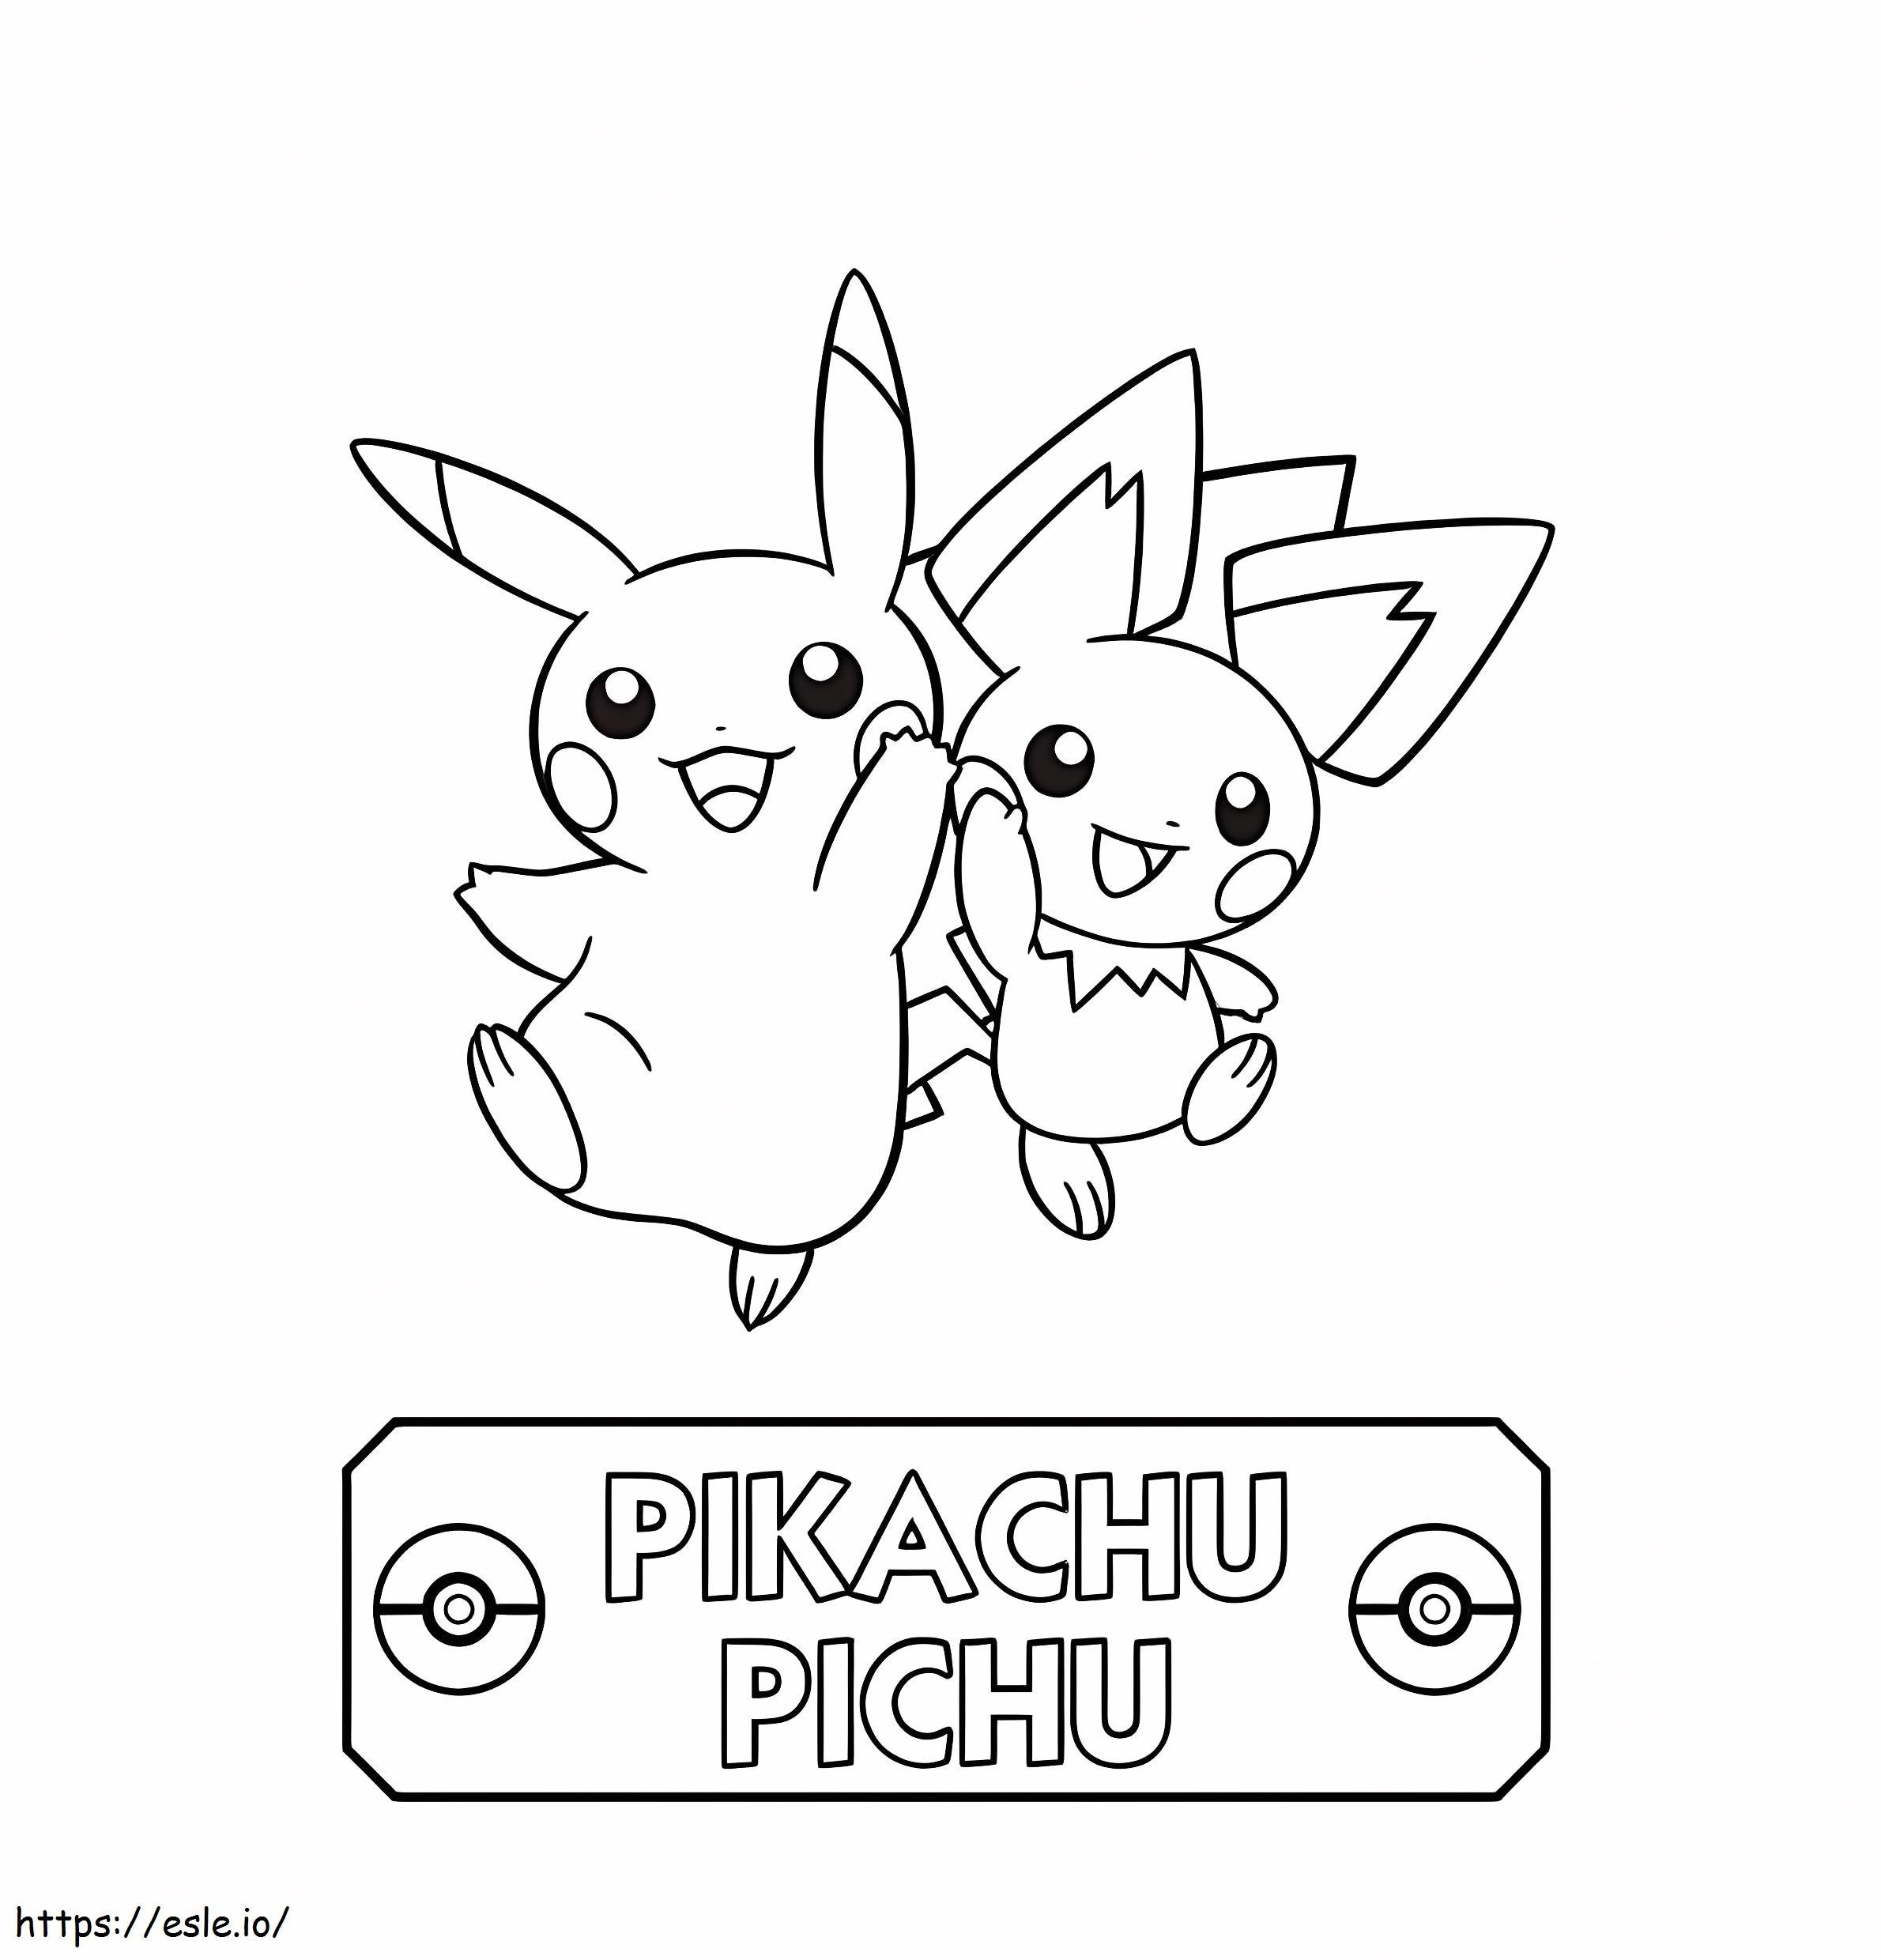 Pichu ve Pikachu Zıplıyor boyama